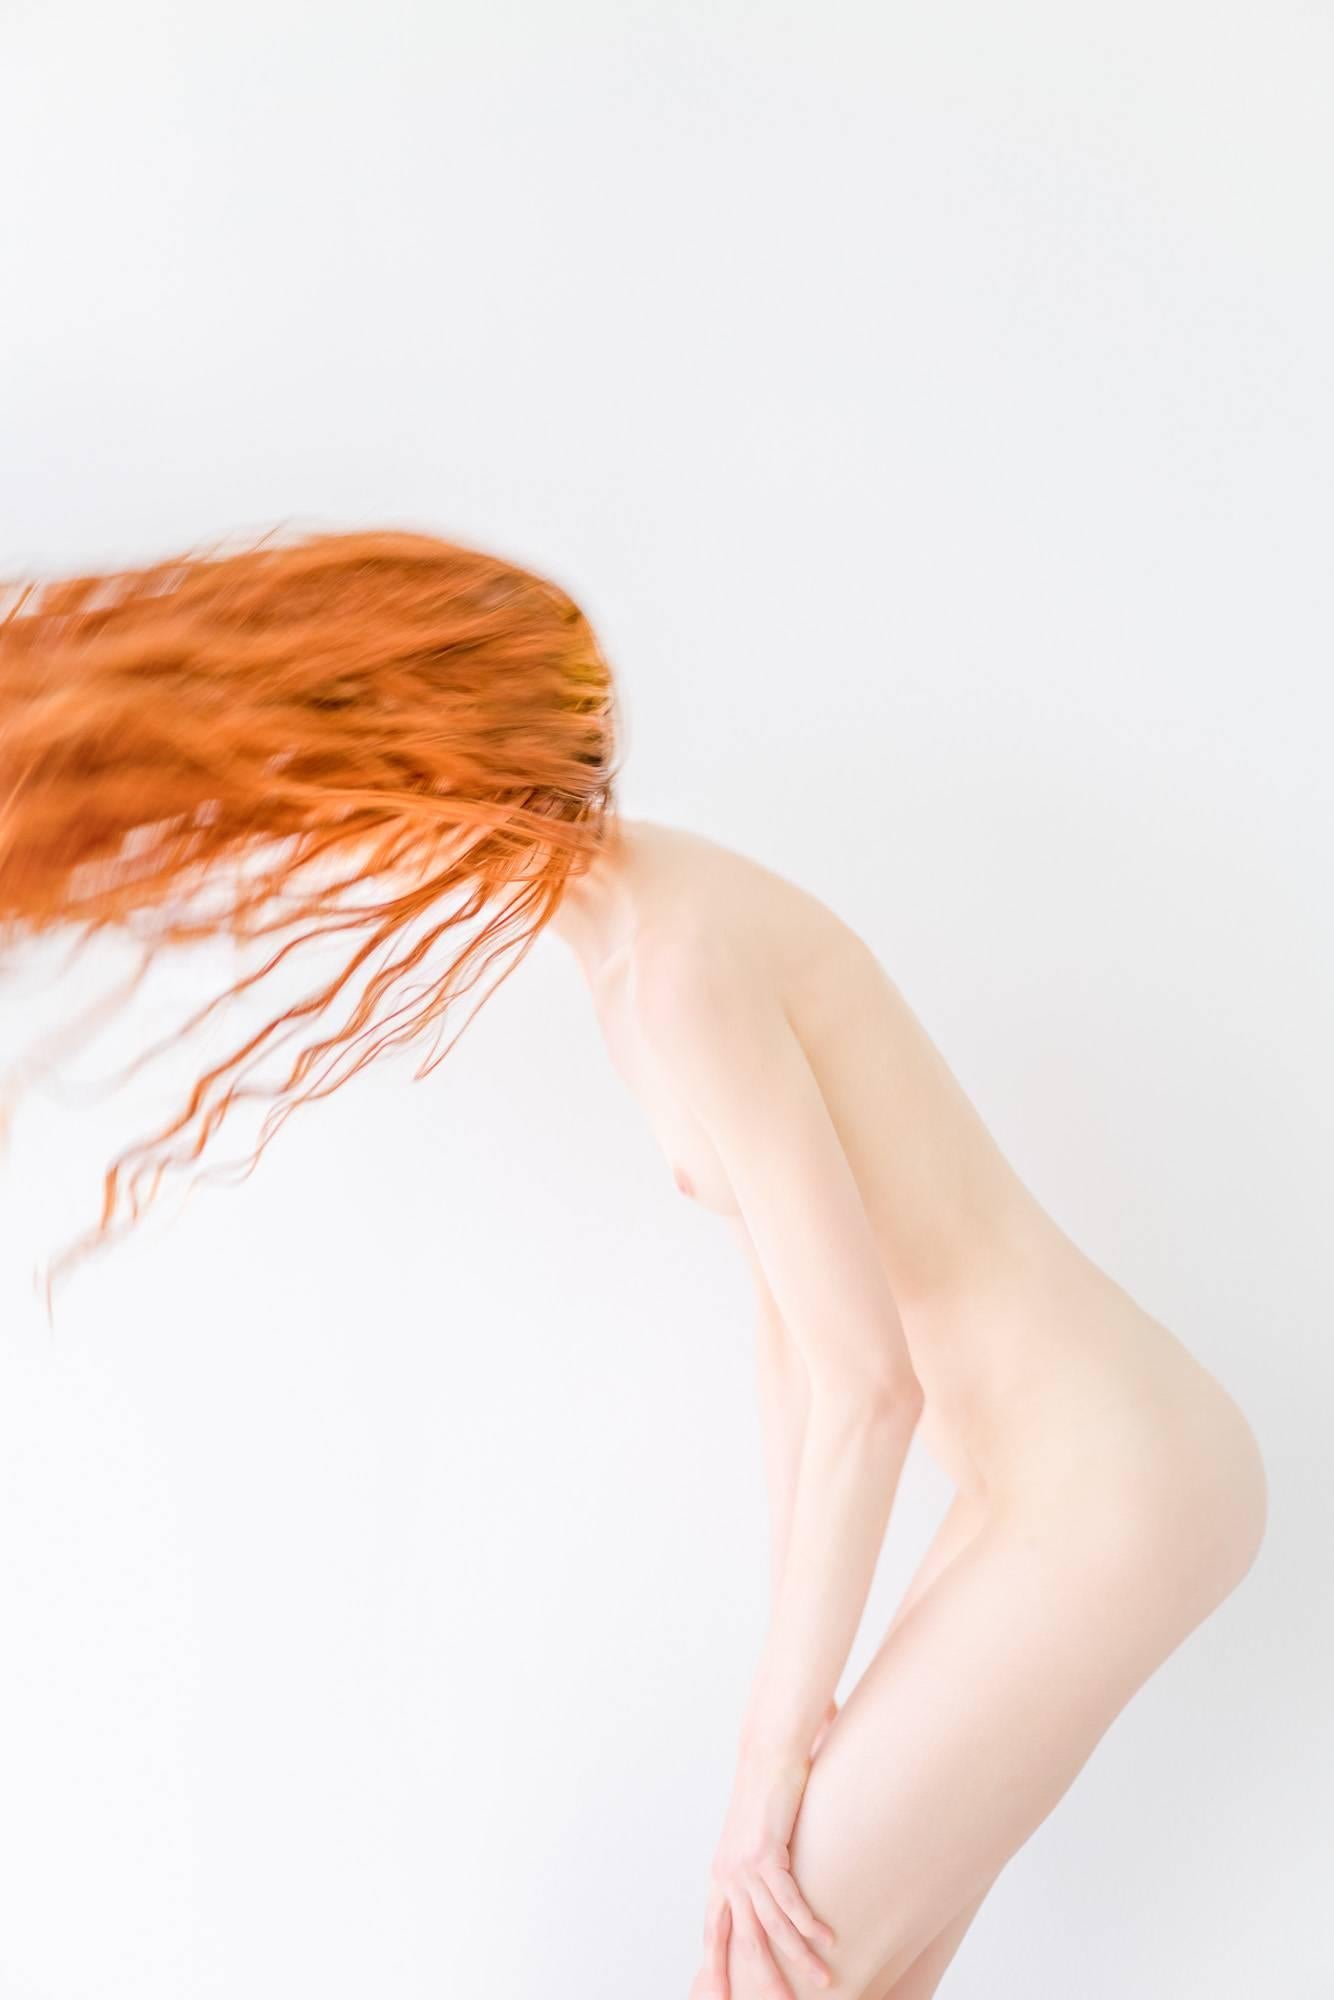 Nude Photograph David Jay - ROUGE ! #1. Photographie couleur nue